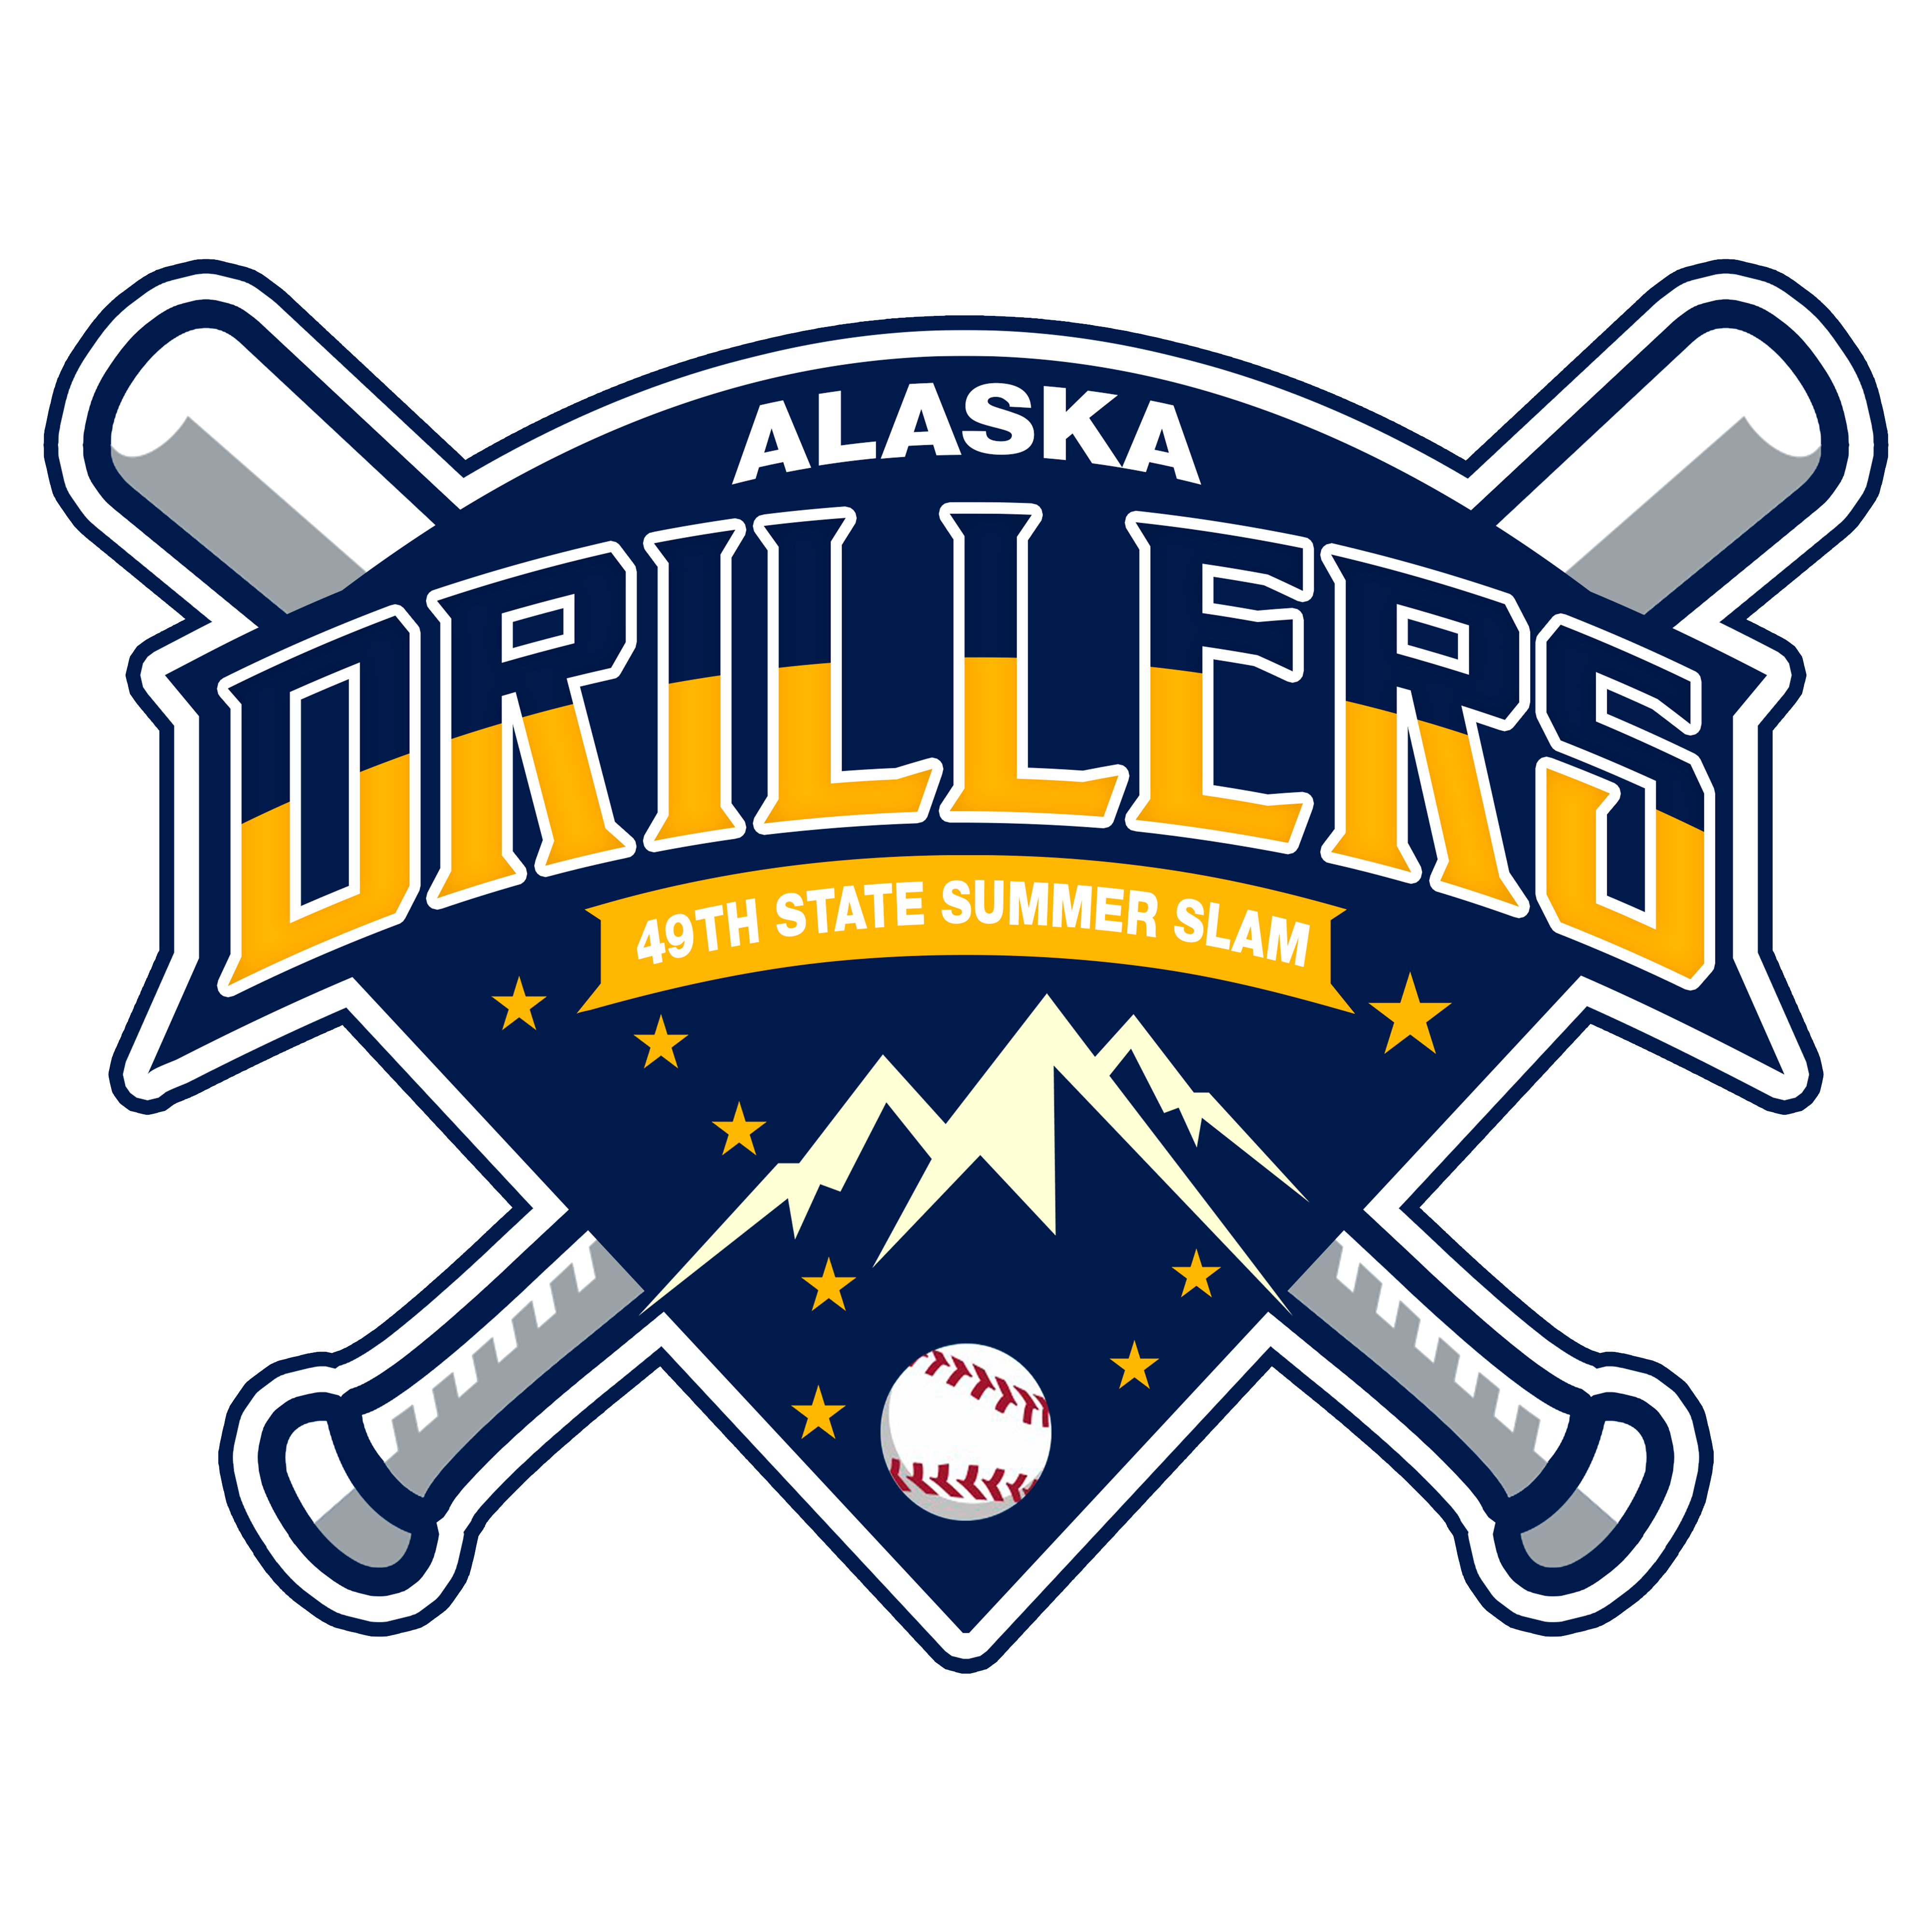 Alaska Drillers logo